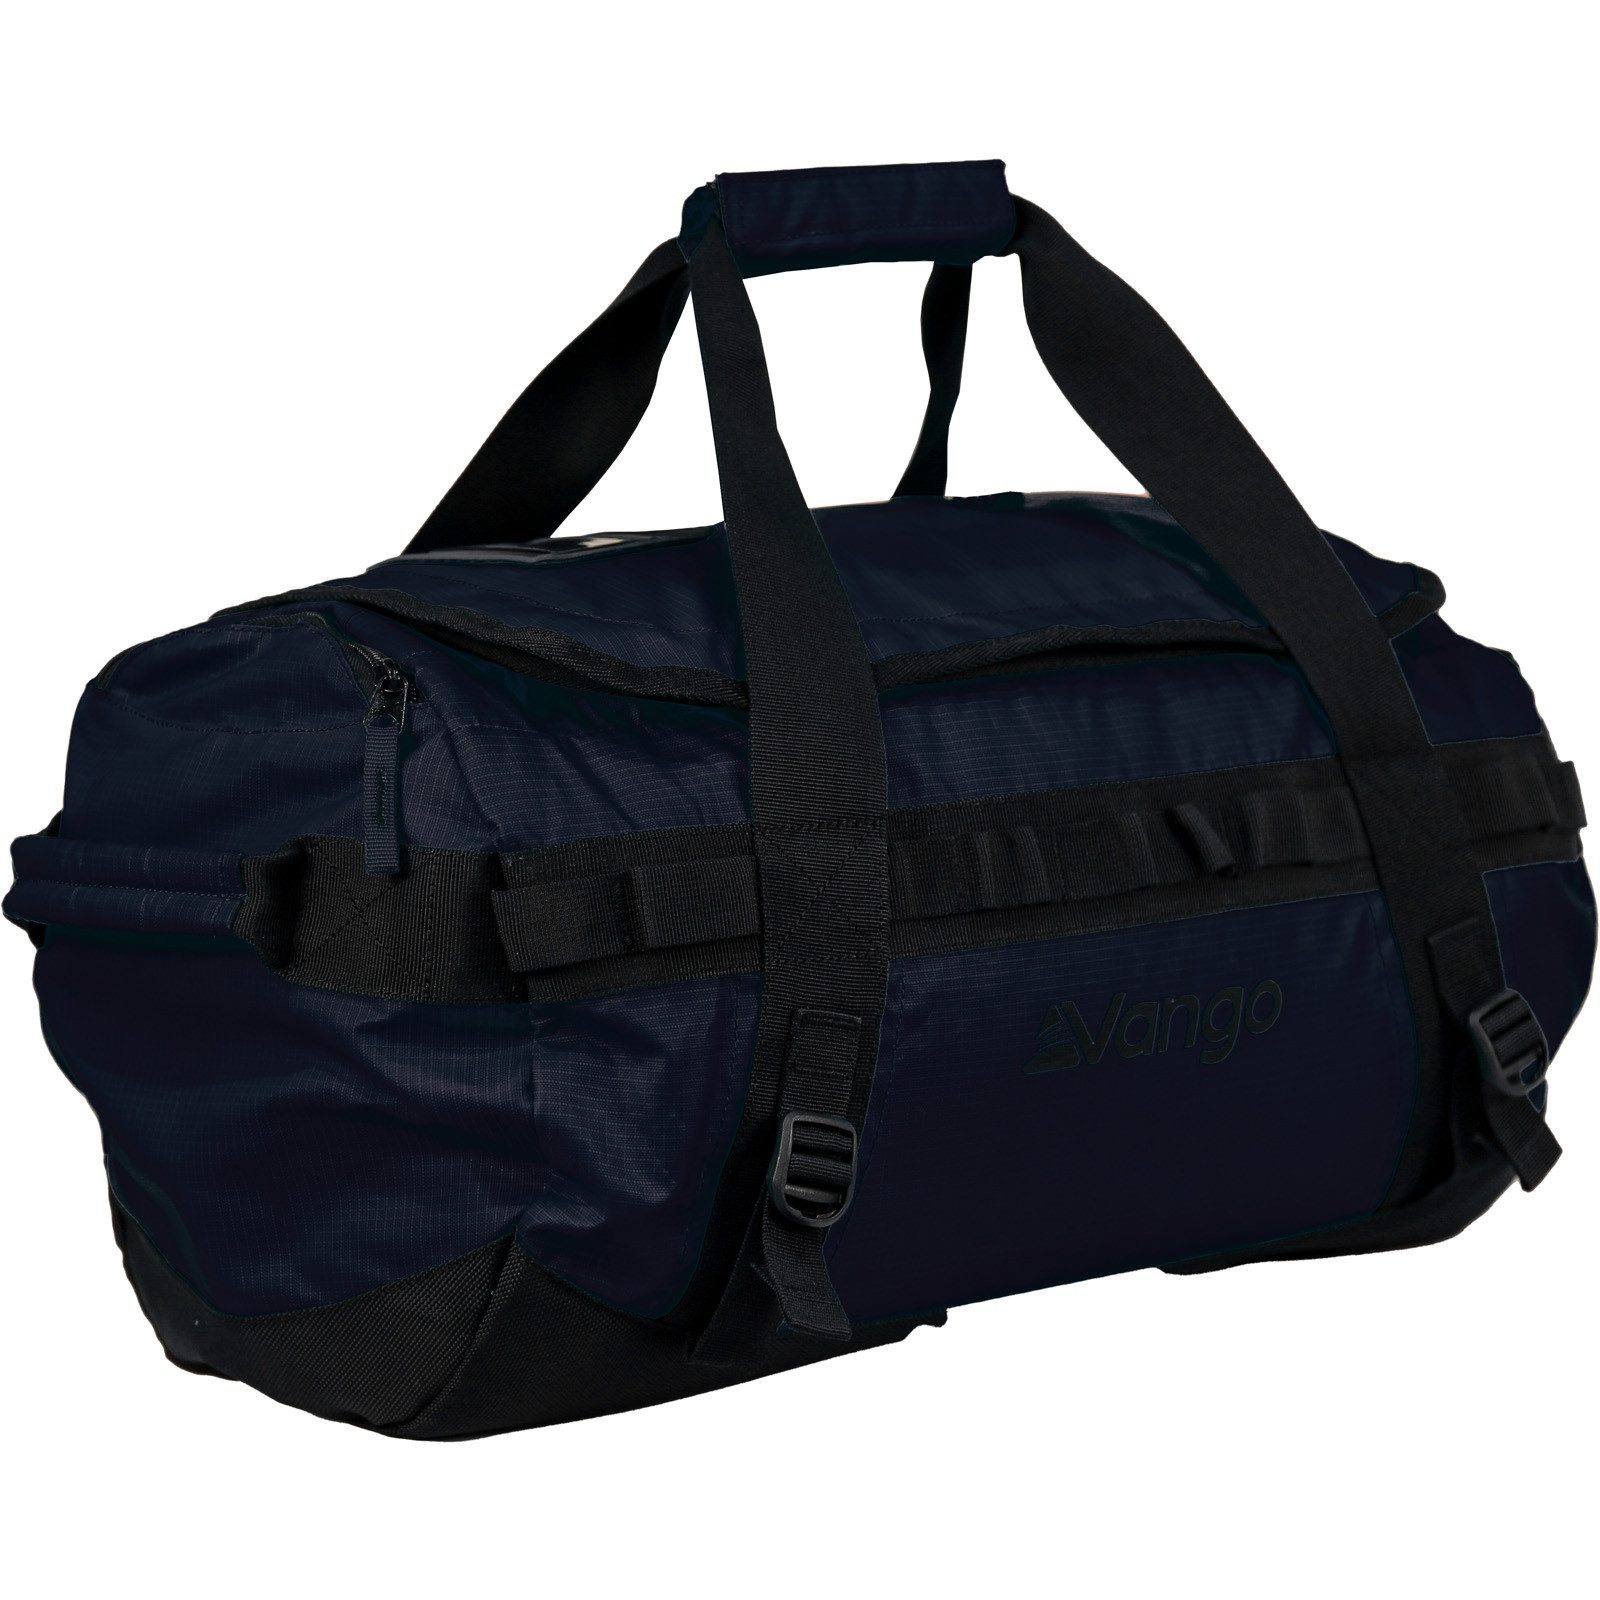 Vango Trekkingrucksack Reisetasche Cargo 40 Duffle Bag Camping, Rucksack Transport Tasche Tragbar